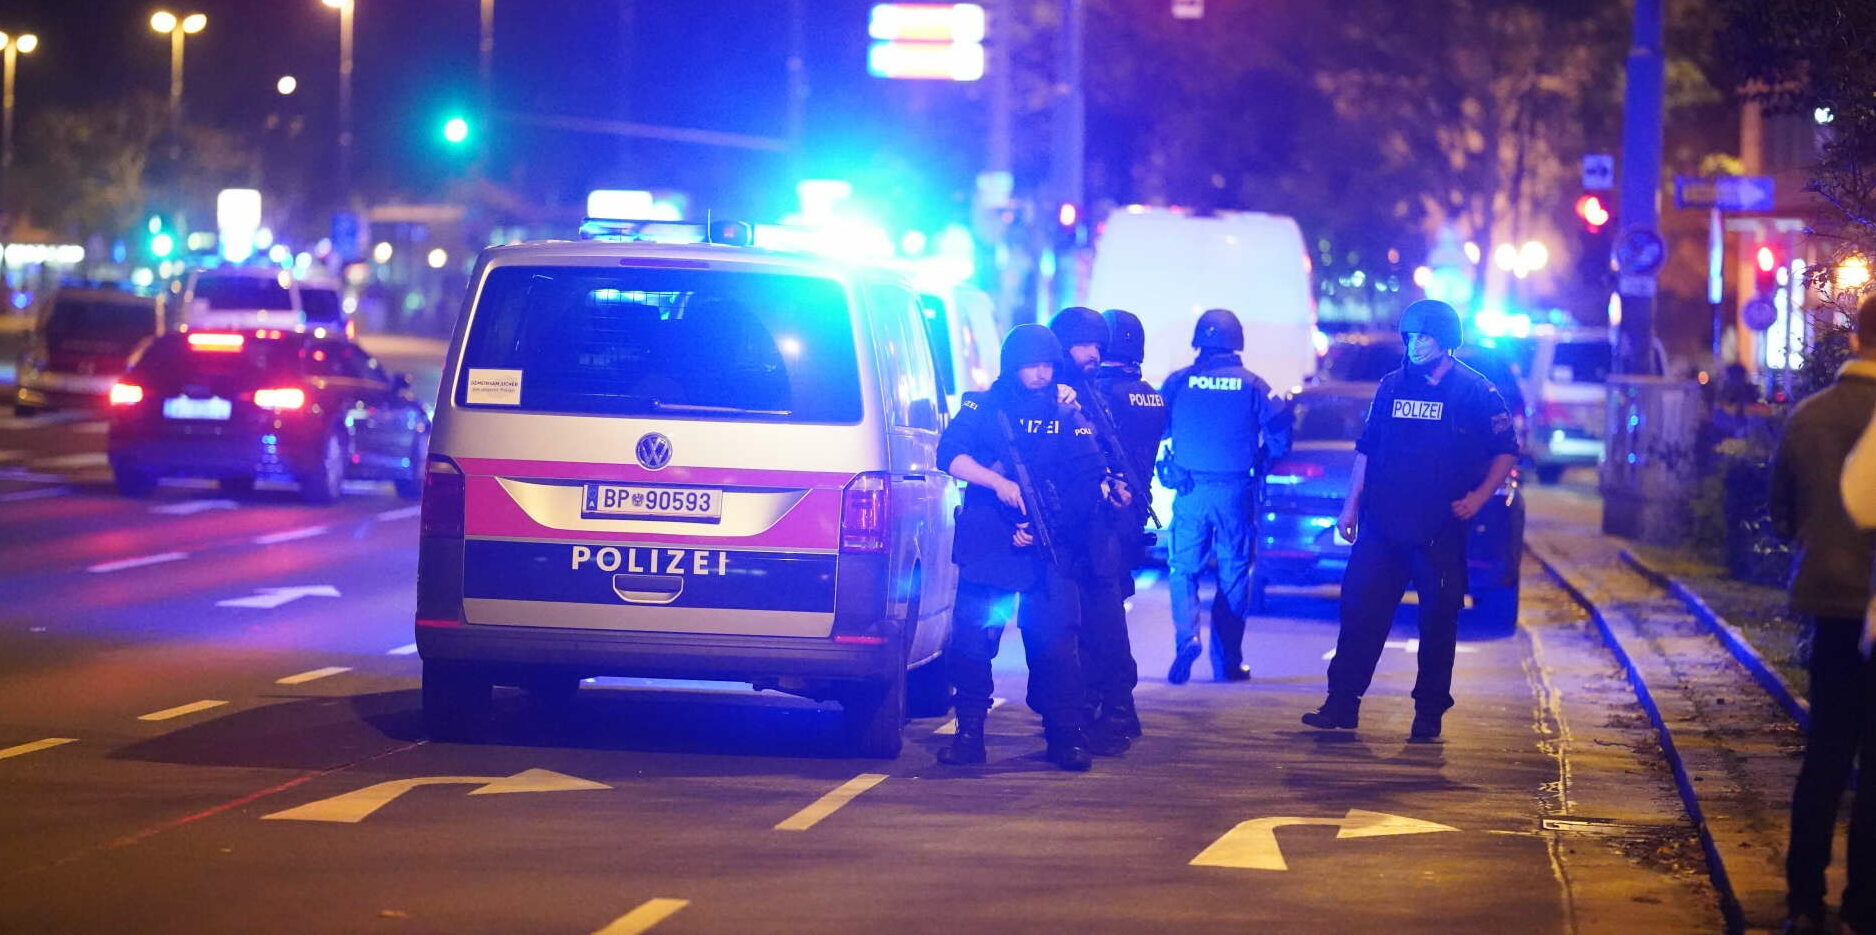 Nach dem Anschlag in Wien fordert OÖ Schritte gegen radikalen Islam.